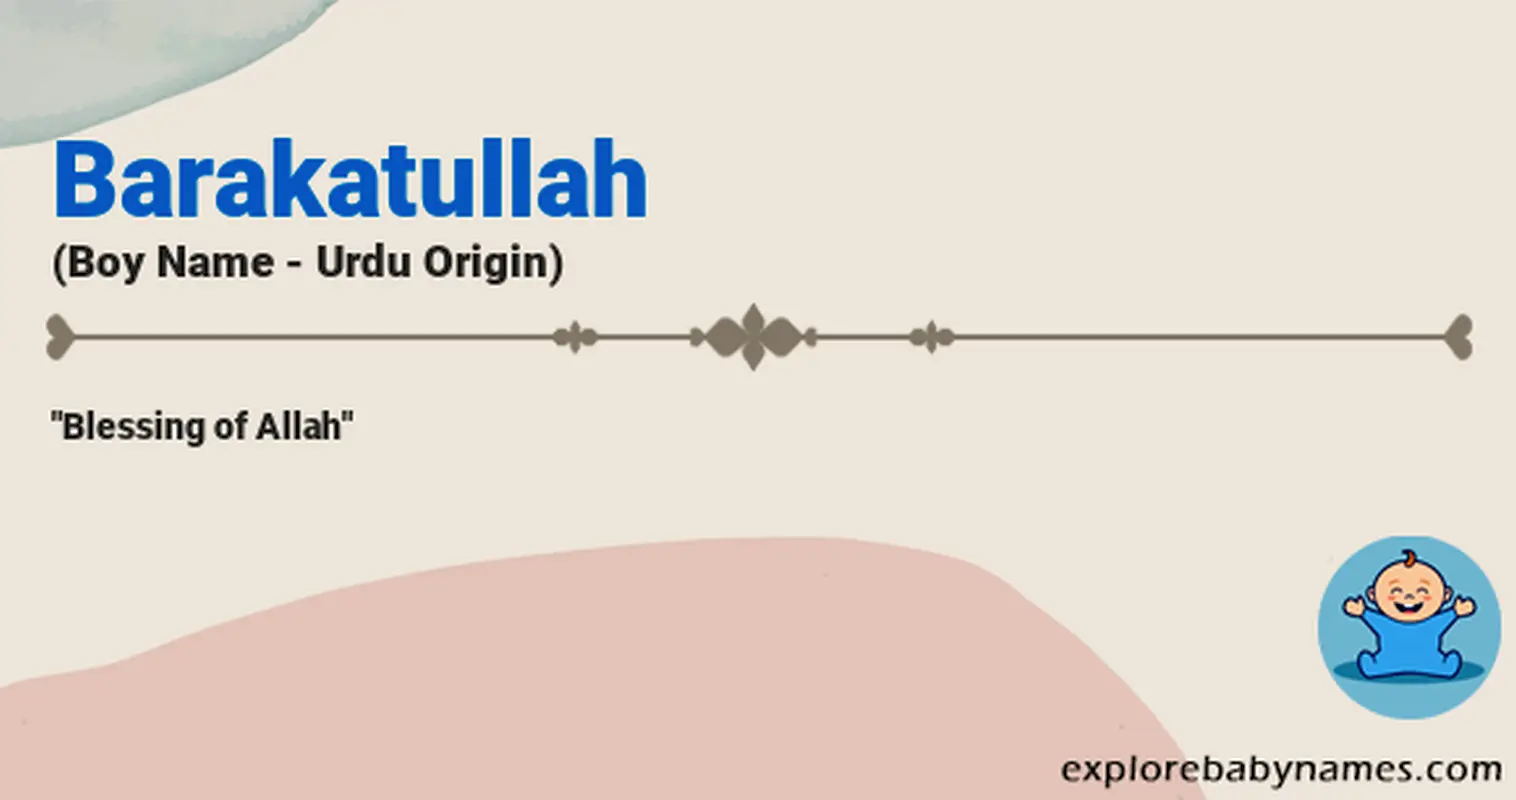 Meaning of Barakatullah